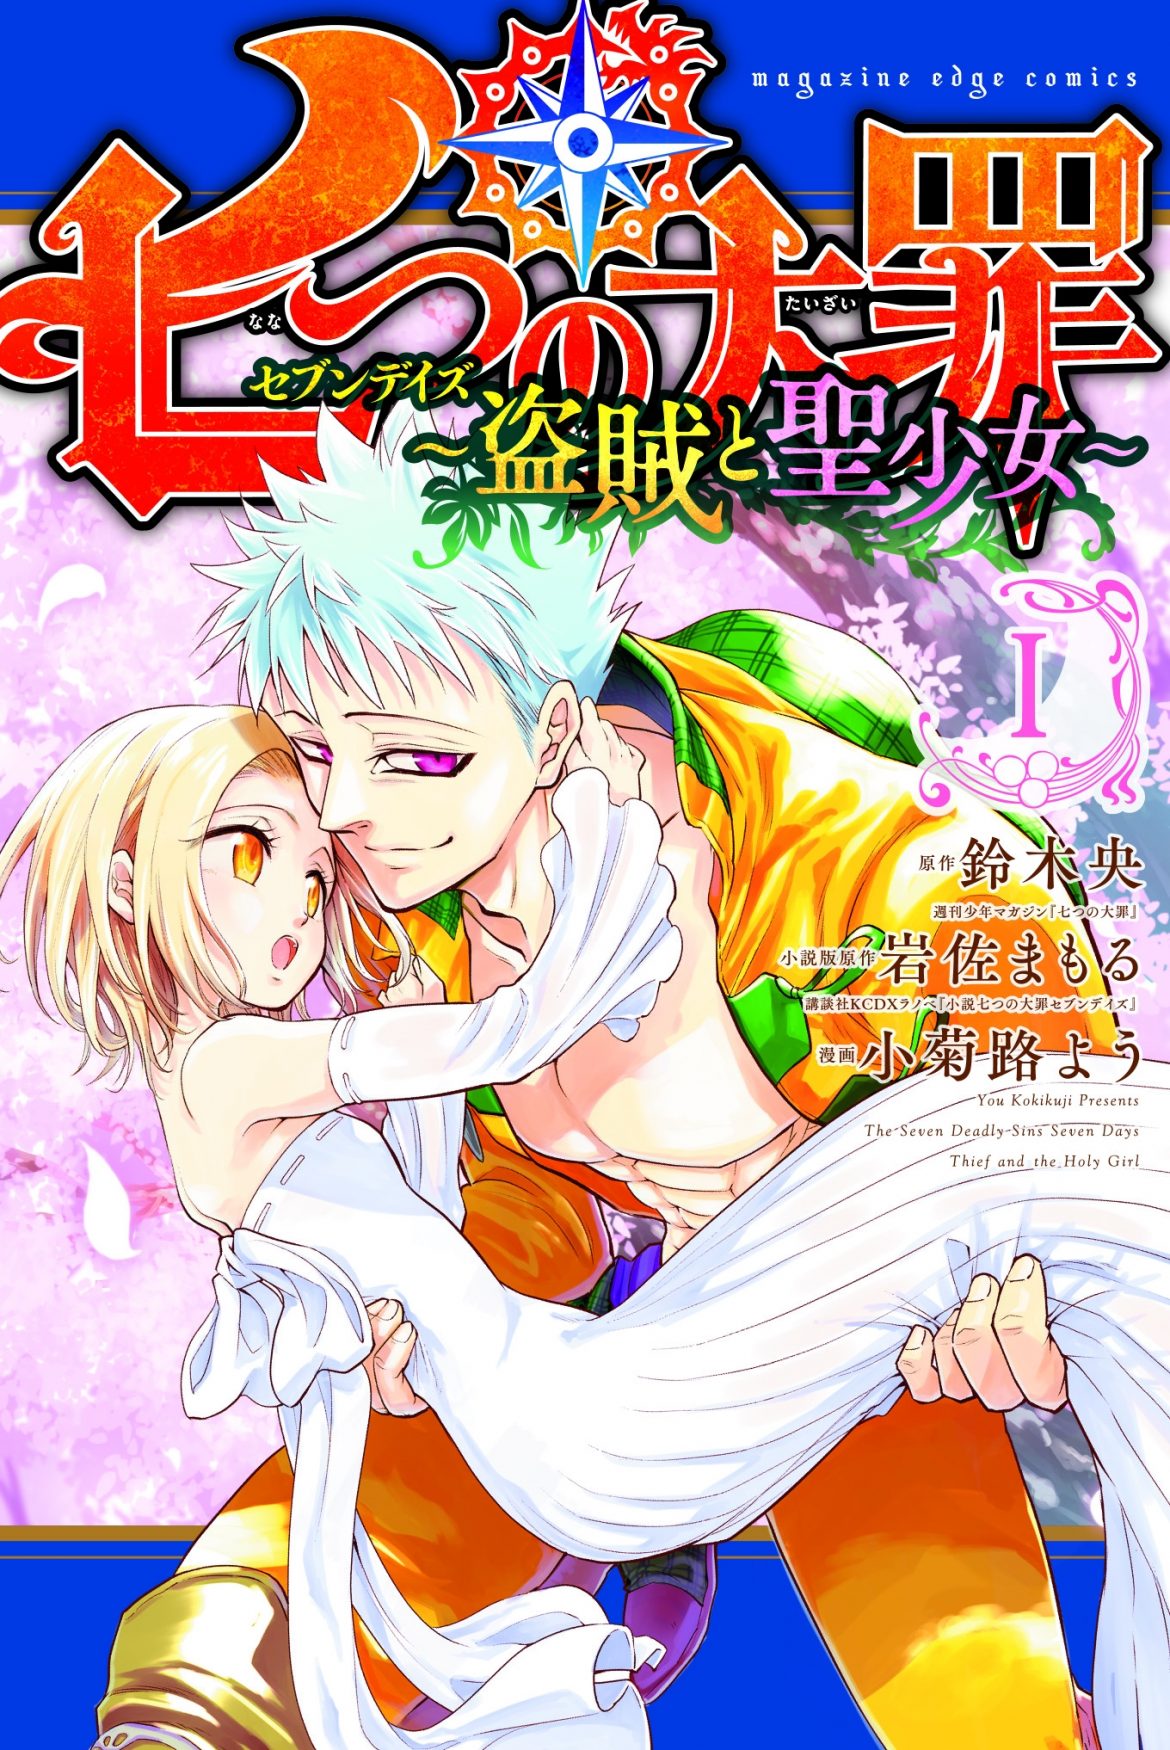 El manga spin-off de Nanatsu no Taizai llega a su final ...